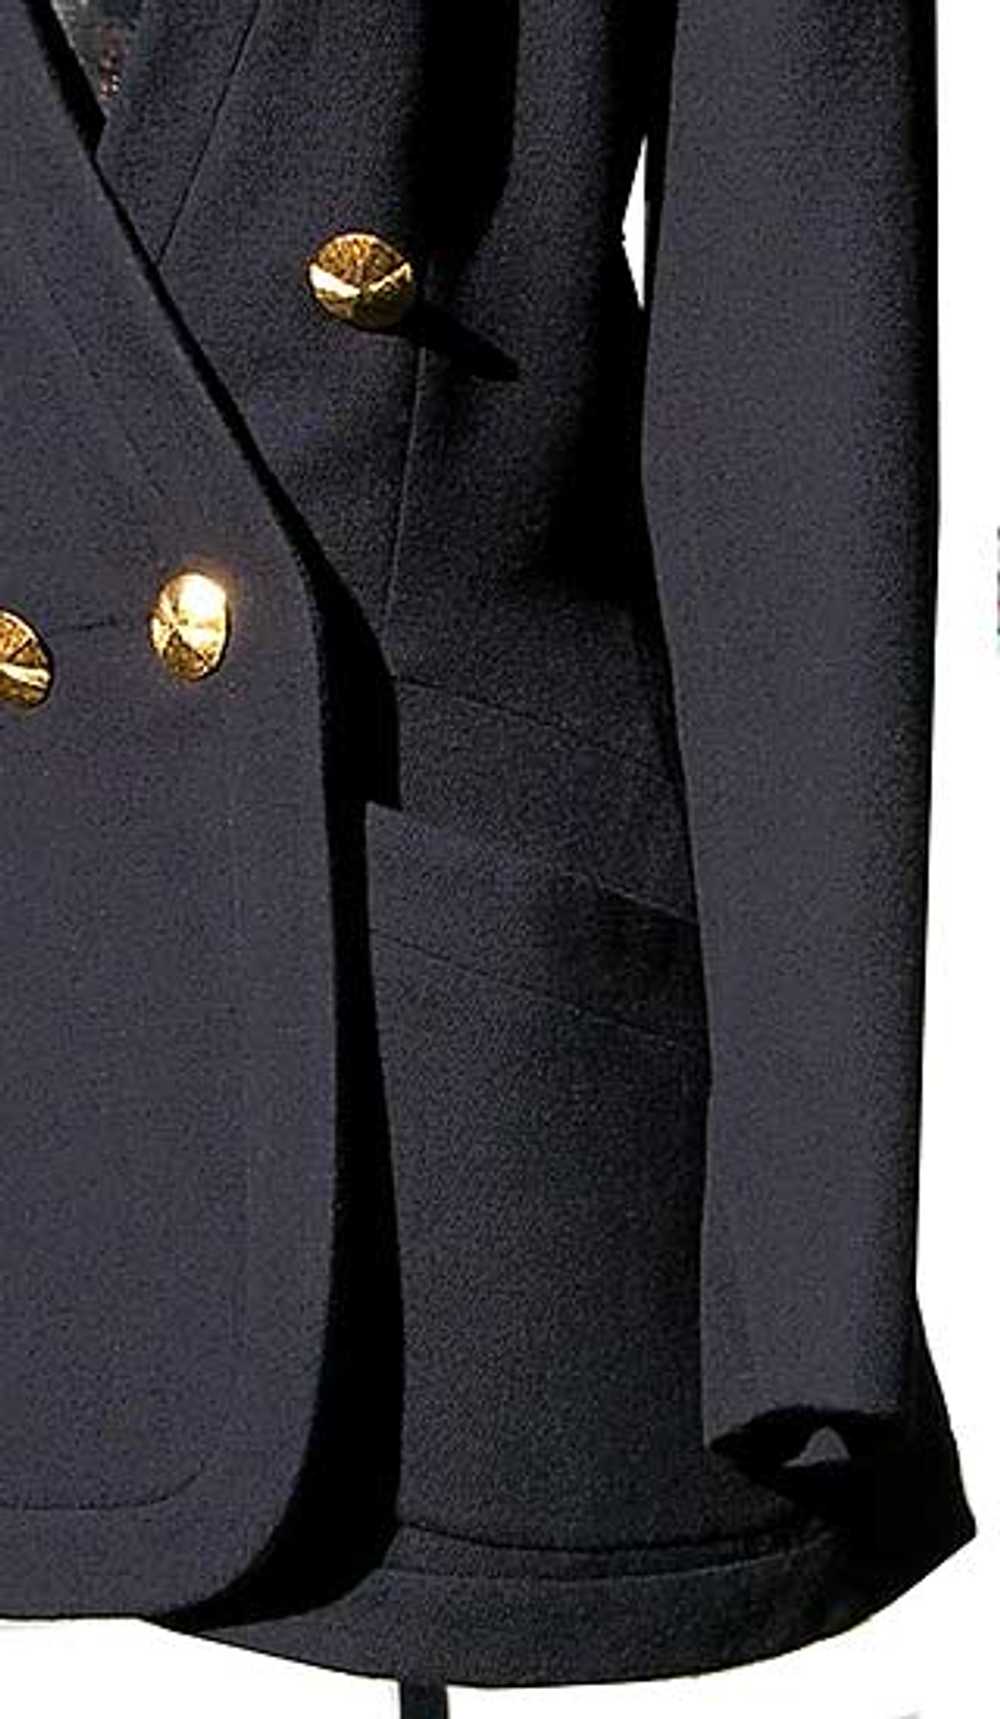 YSL Rive Gauche jacket - image 4